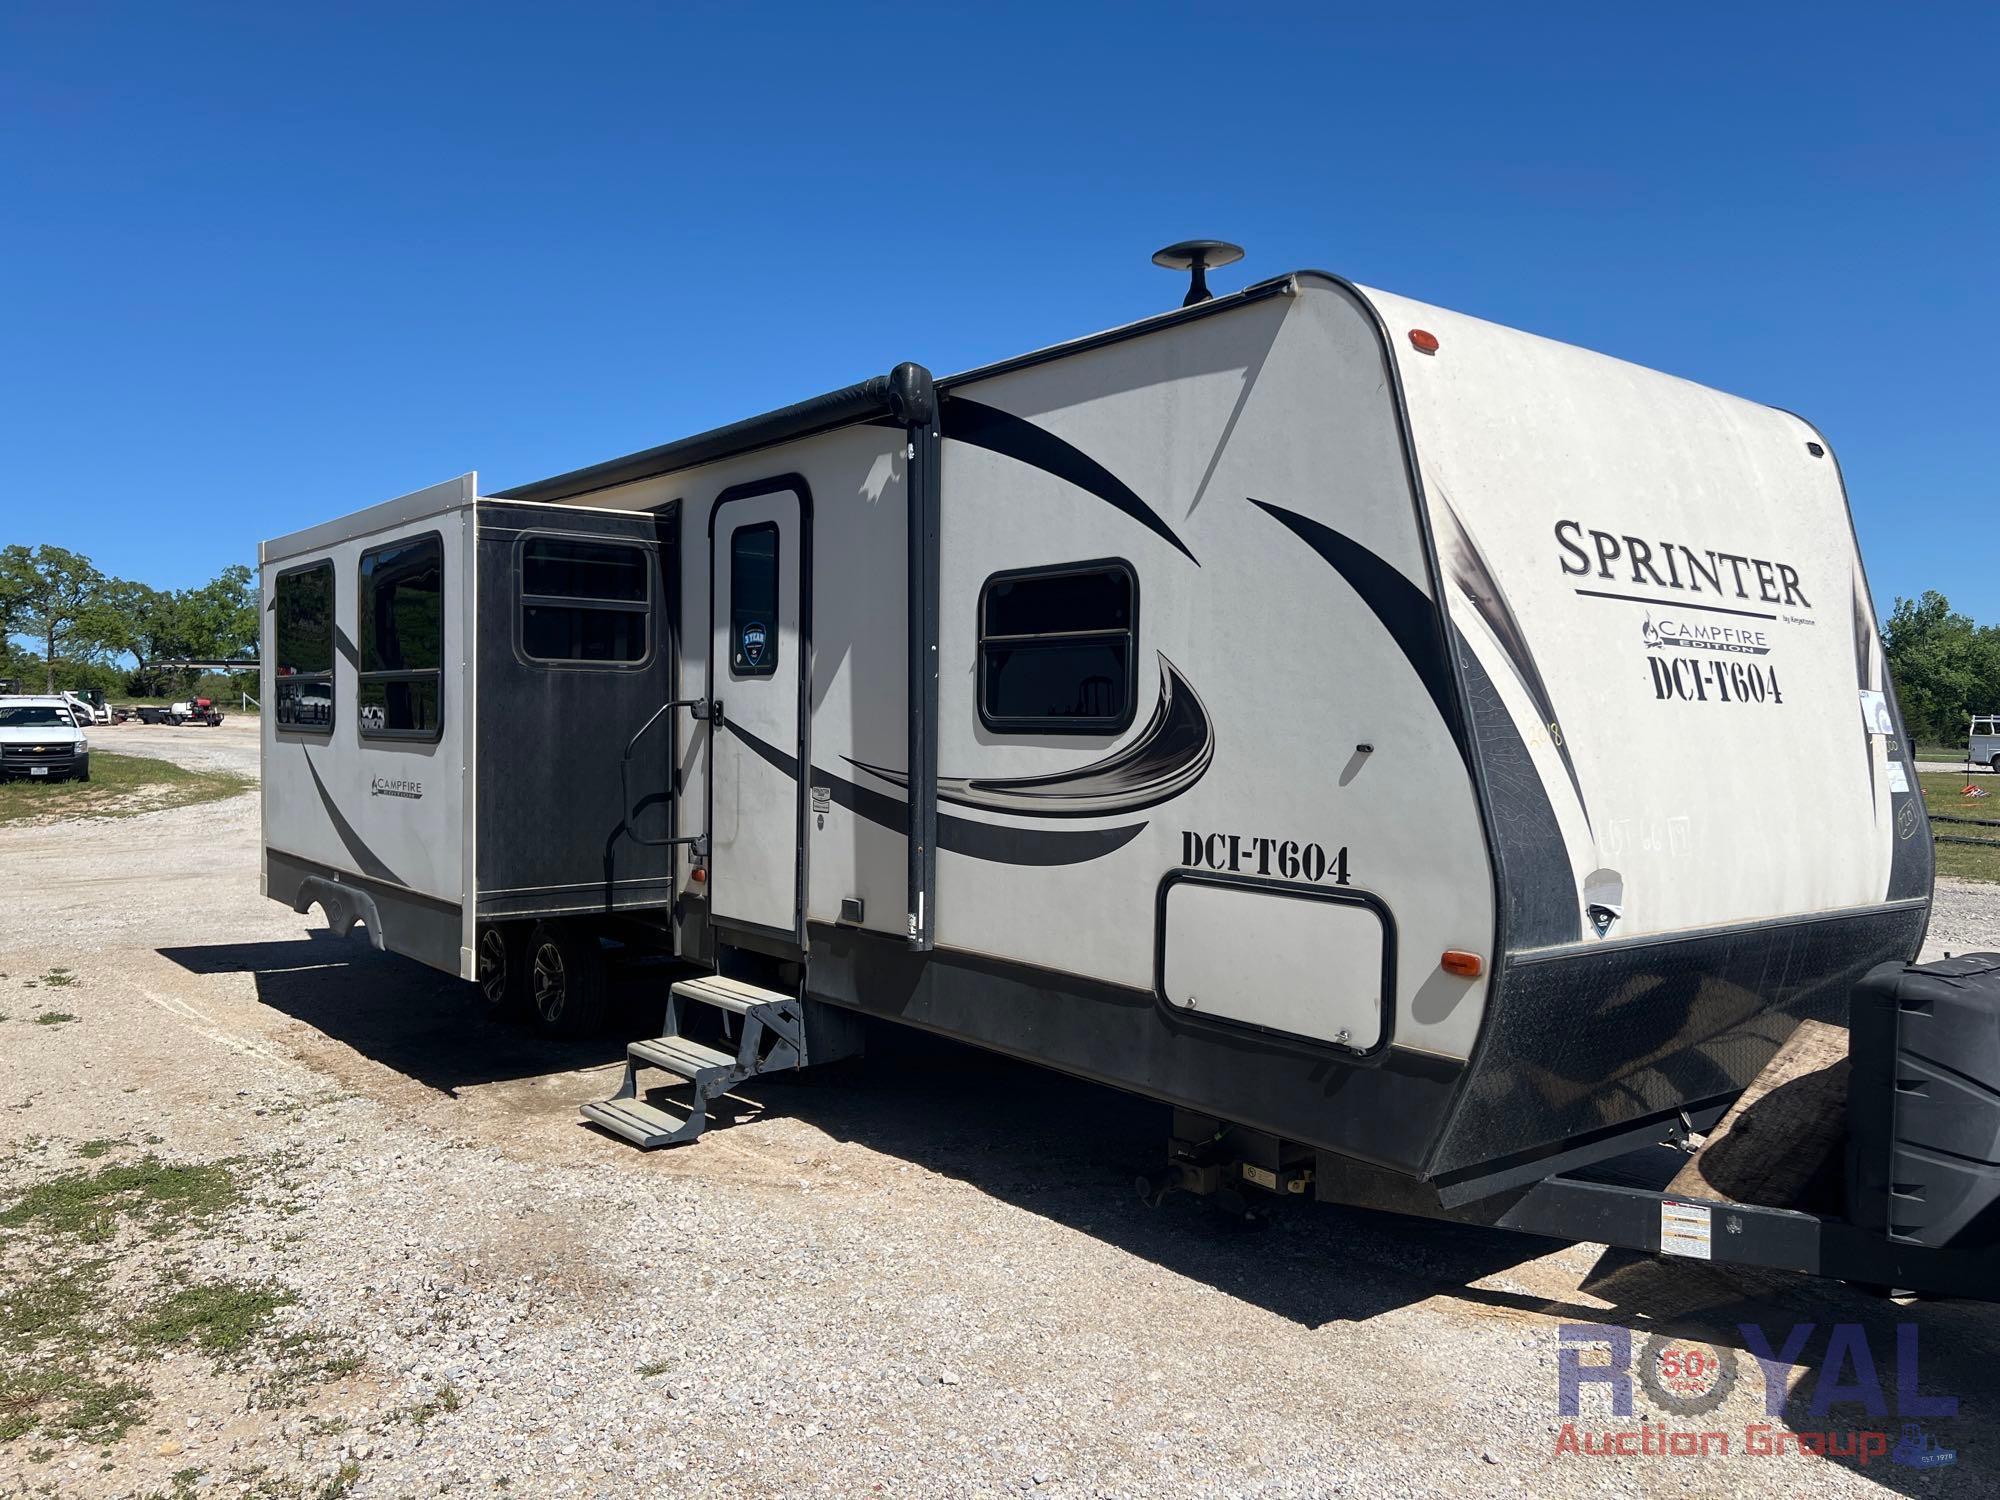 2018 Keystone Sprinter 33BH Campfire Edition Travel Trailer